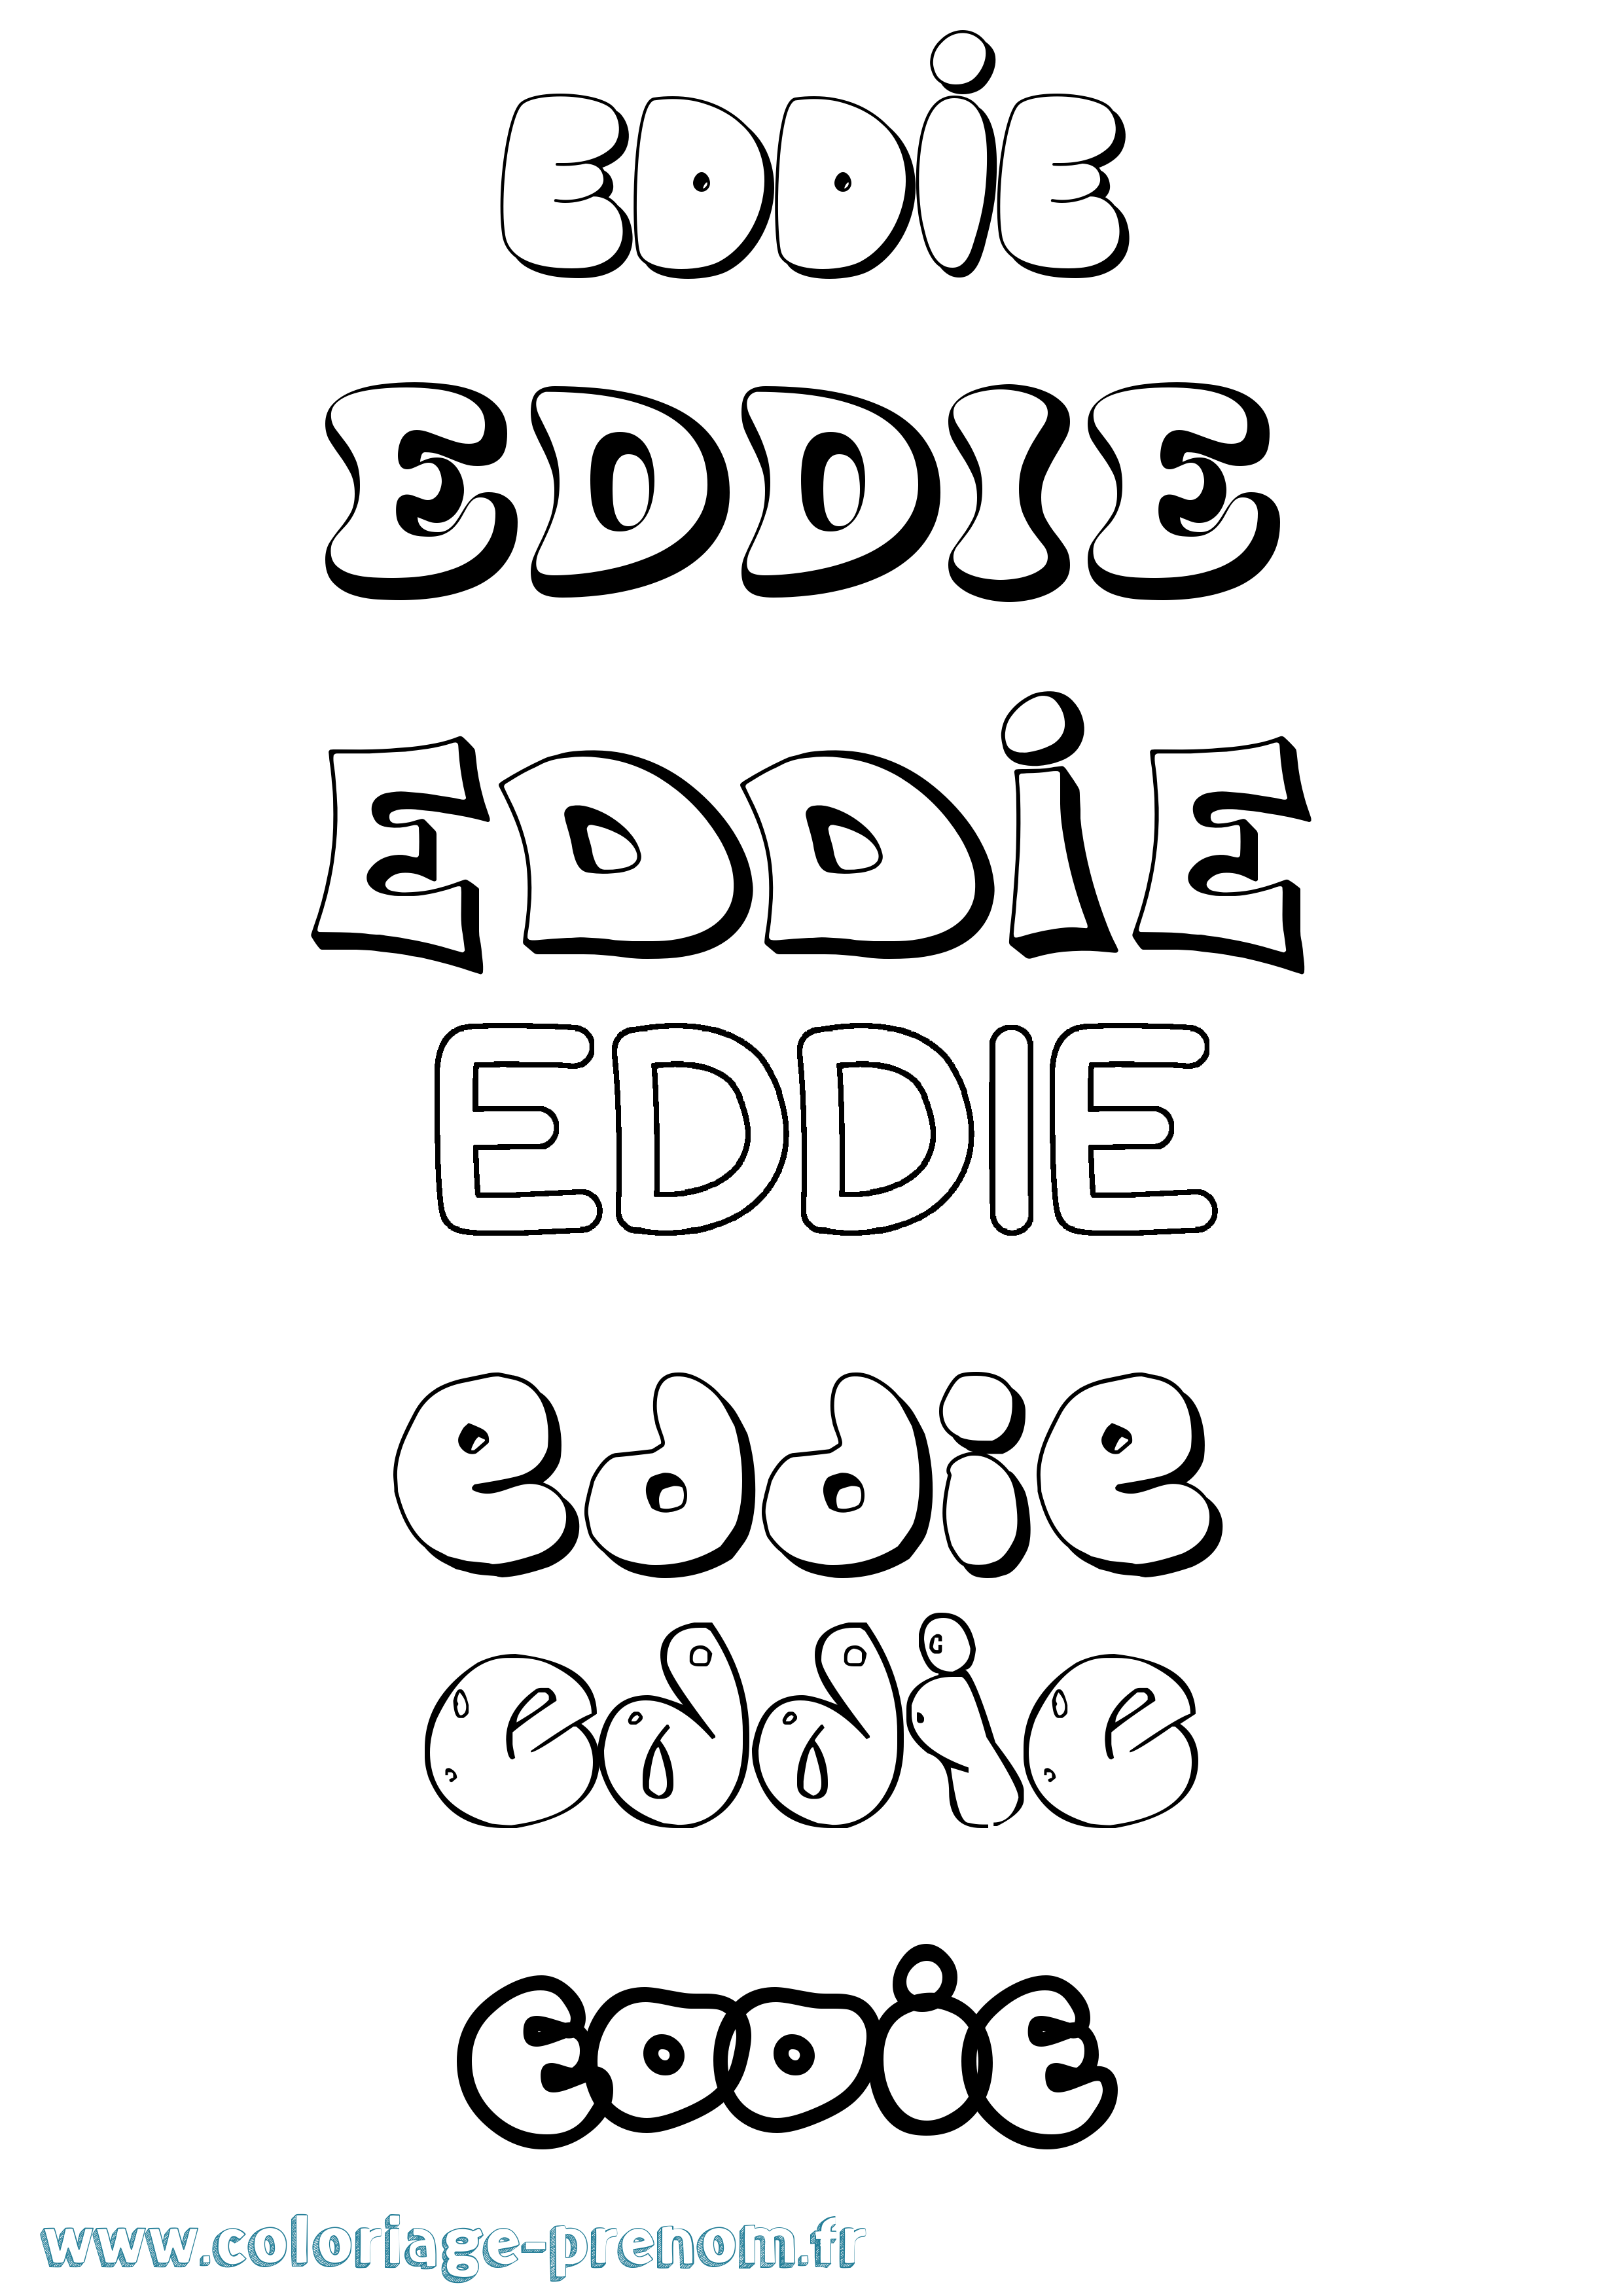 Coloriage prénom Eddie Bubble